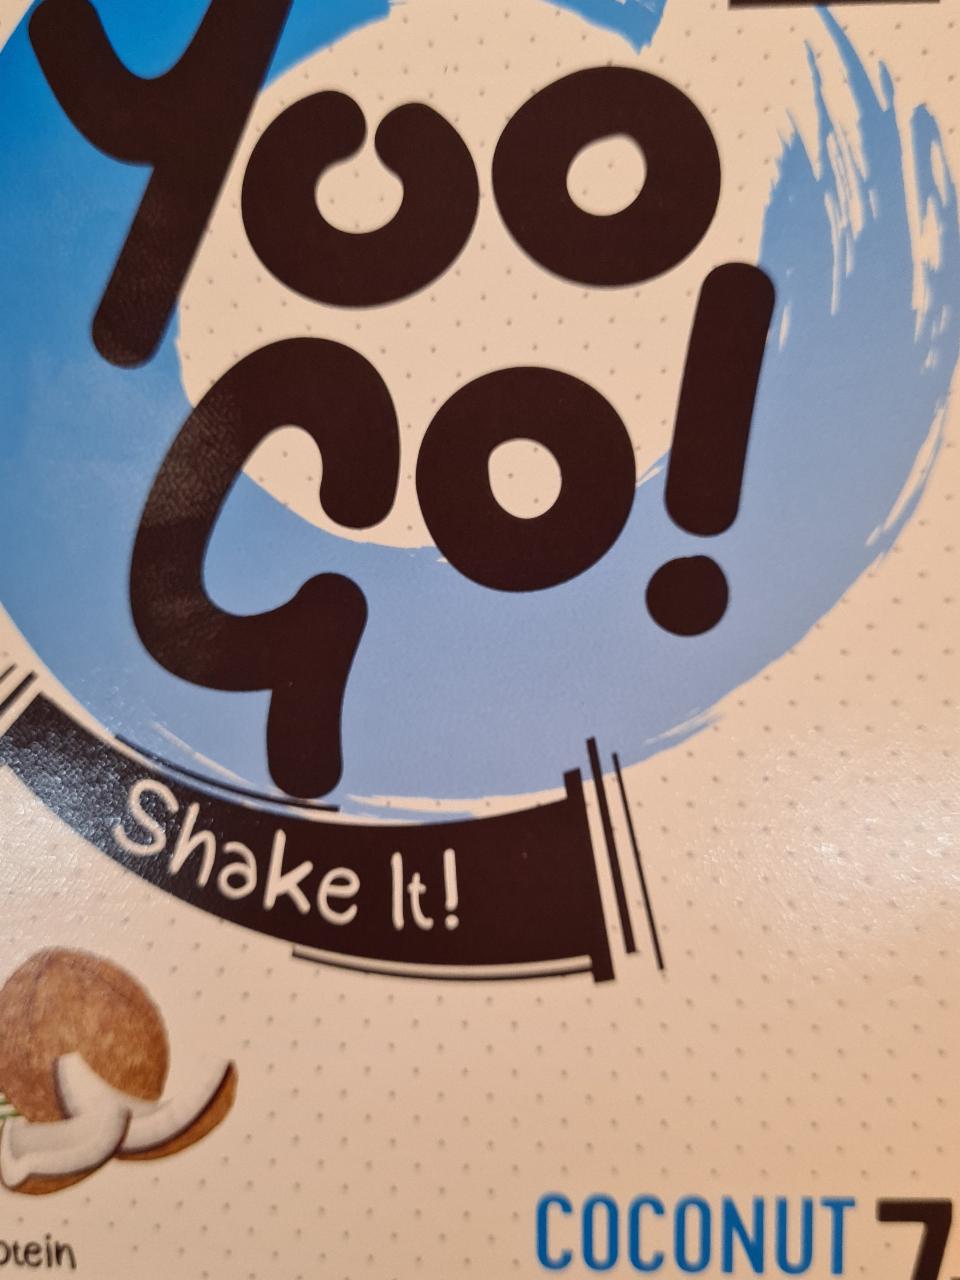 Fotografie - Yoo Go! shake it!